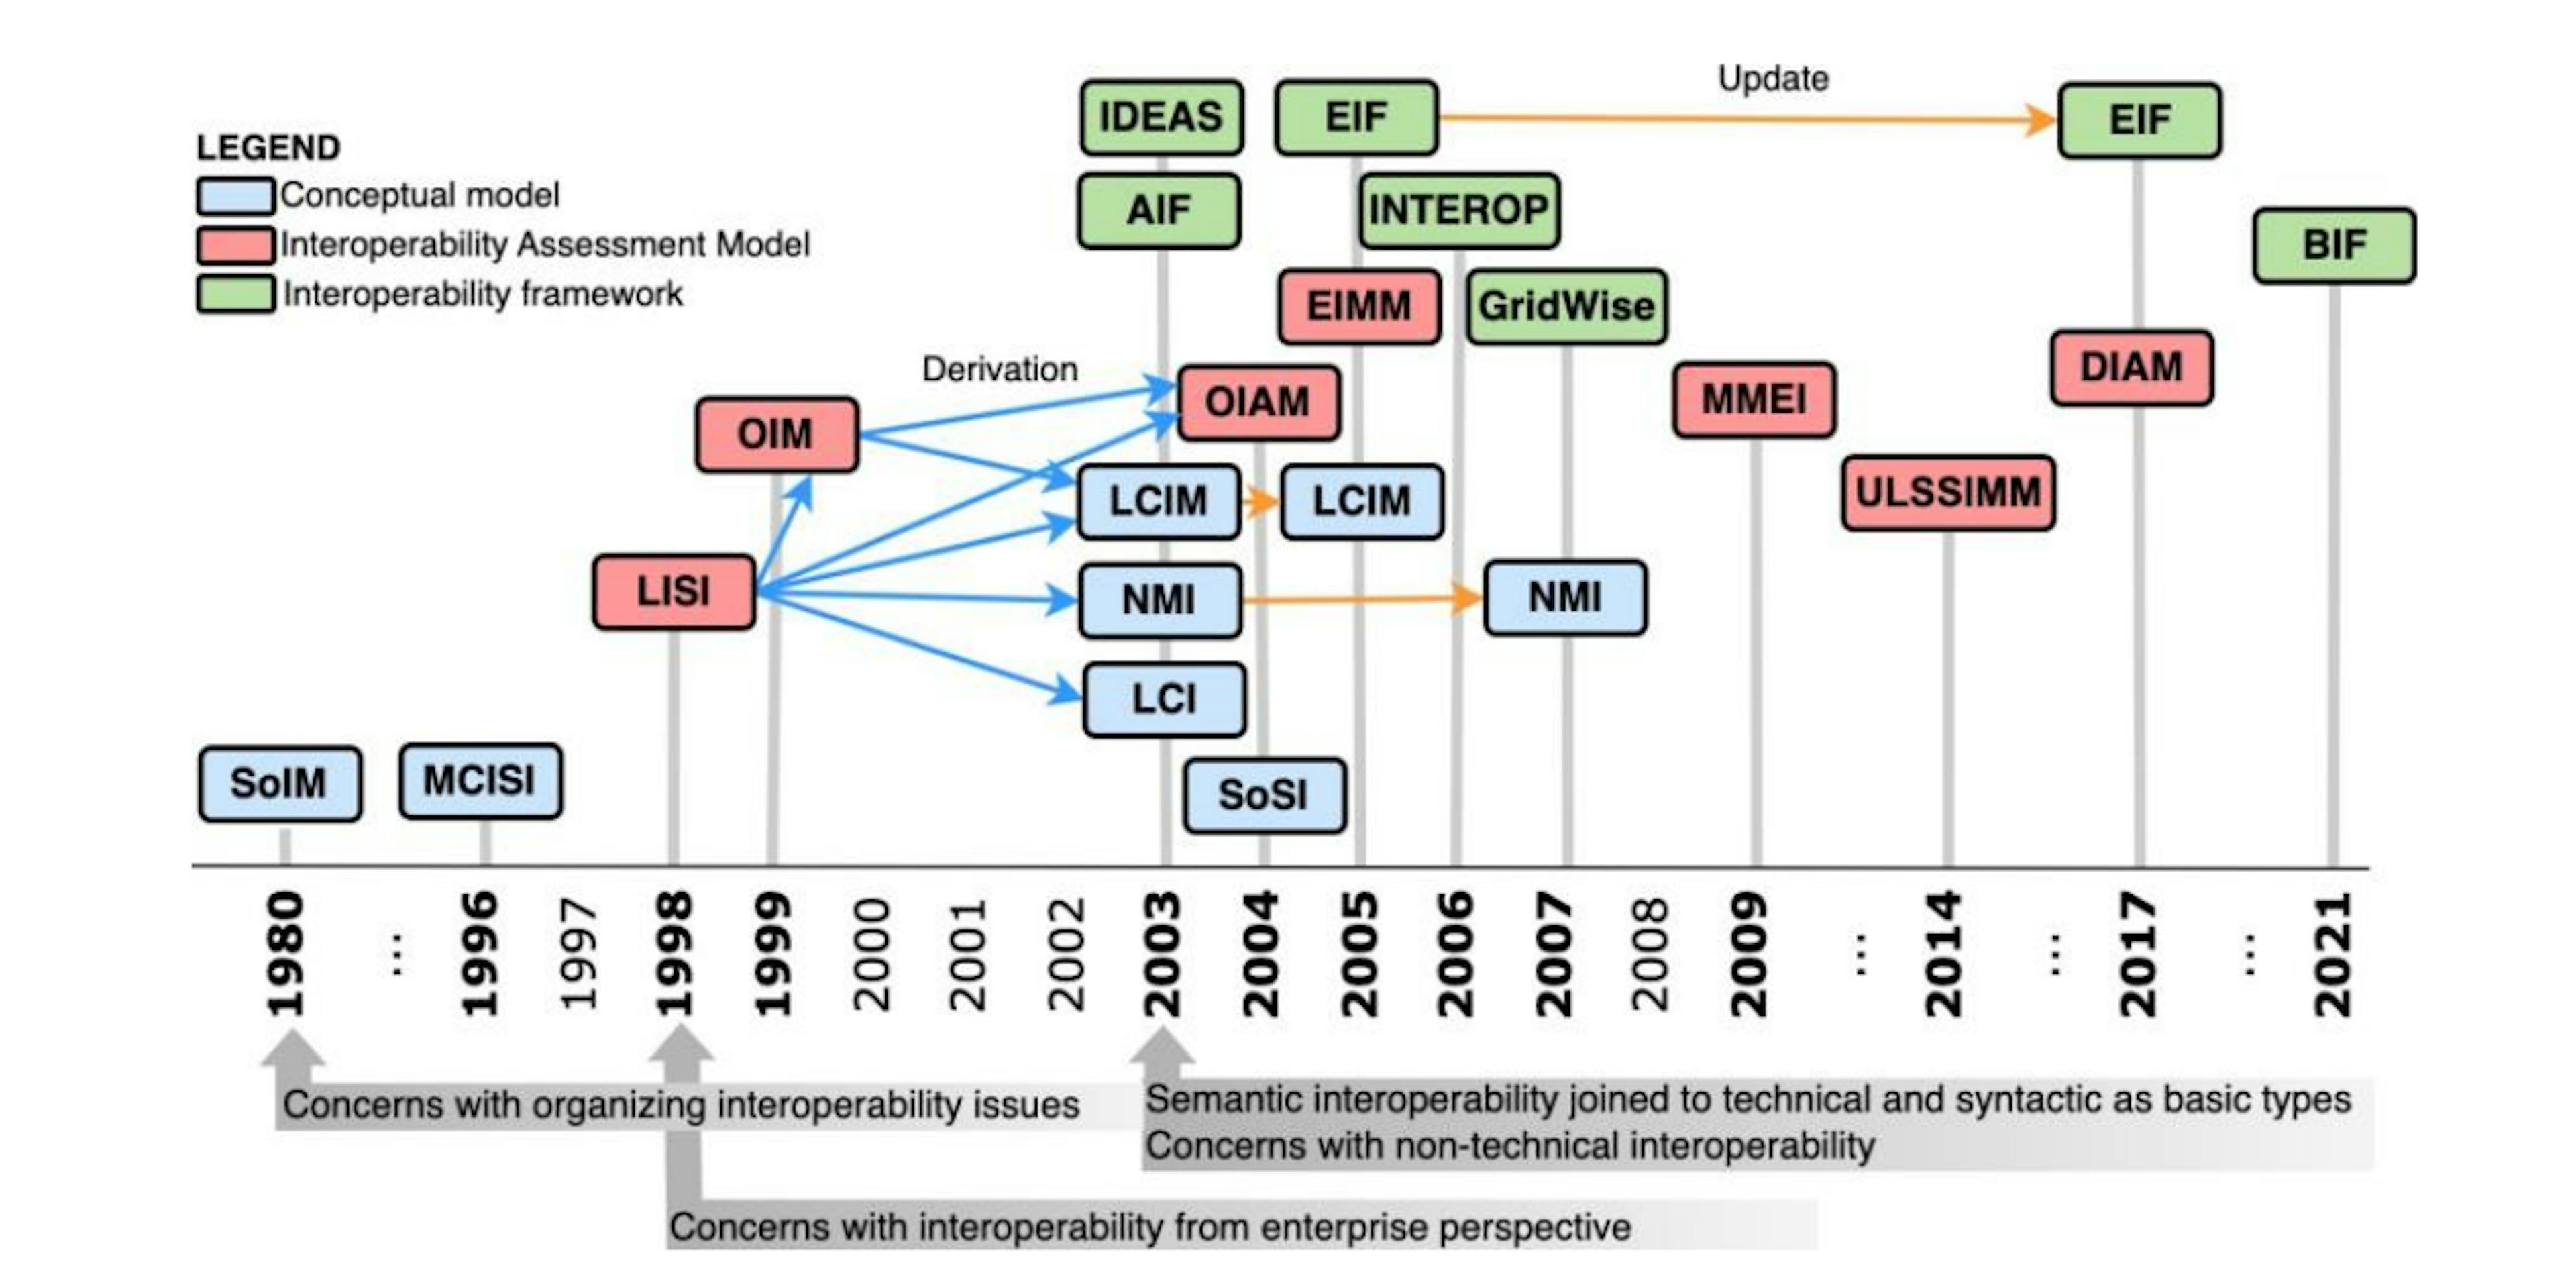 Fig. 4. Interoperability models and frameworks